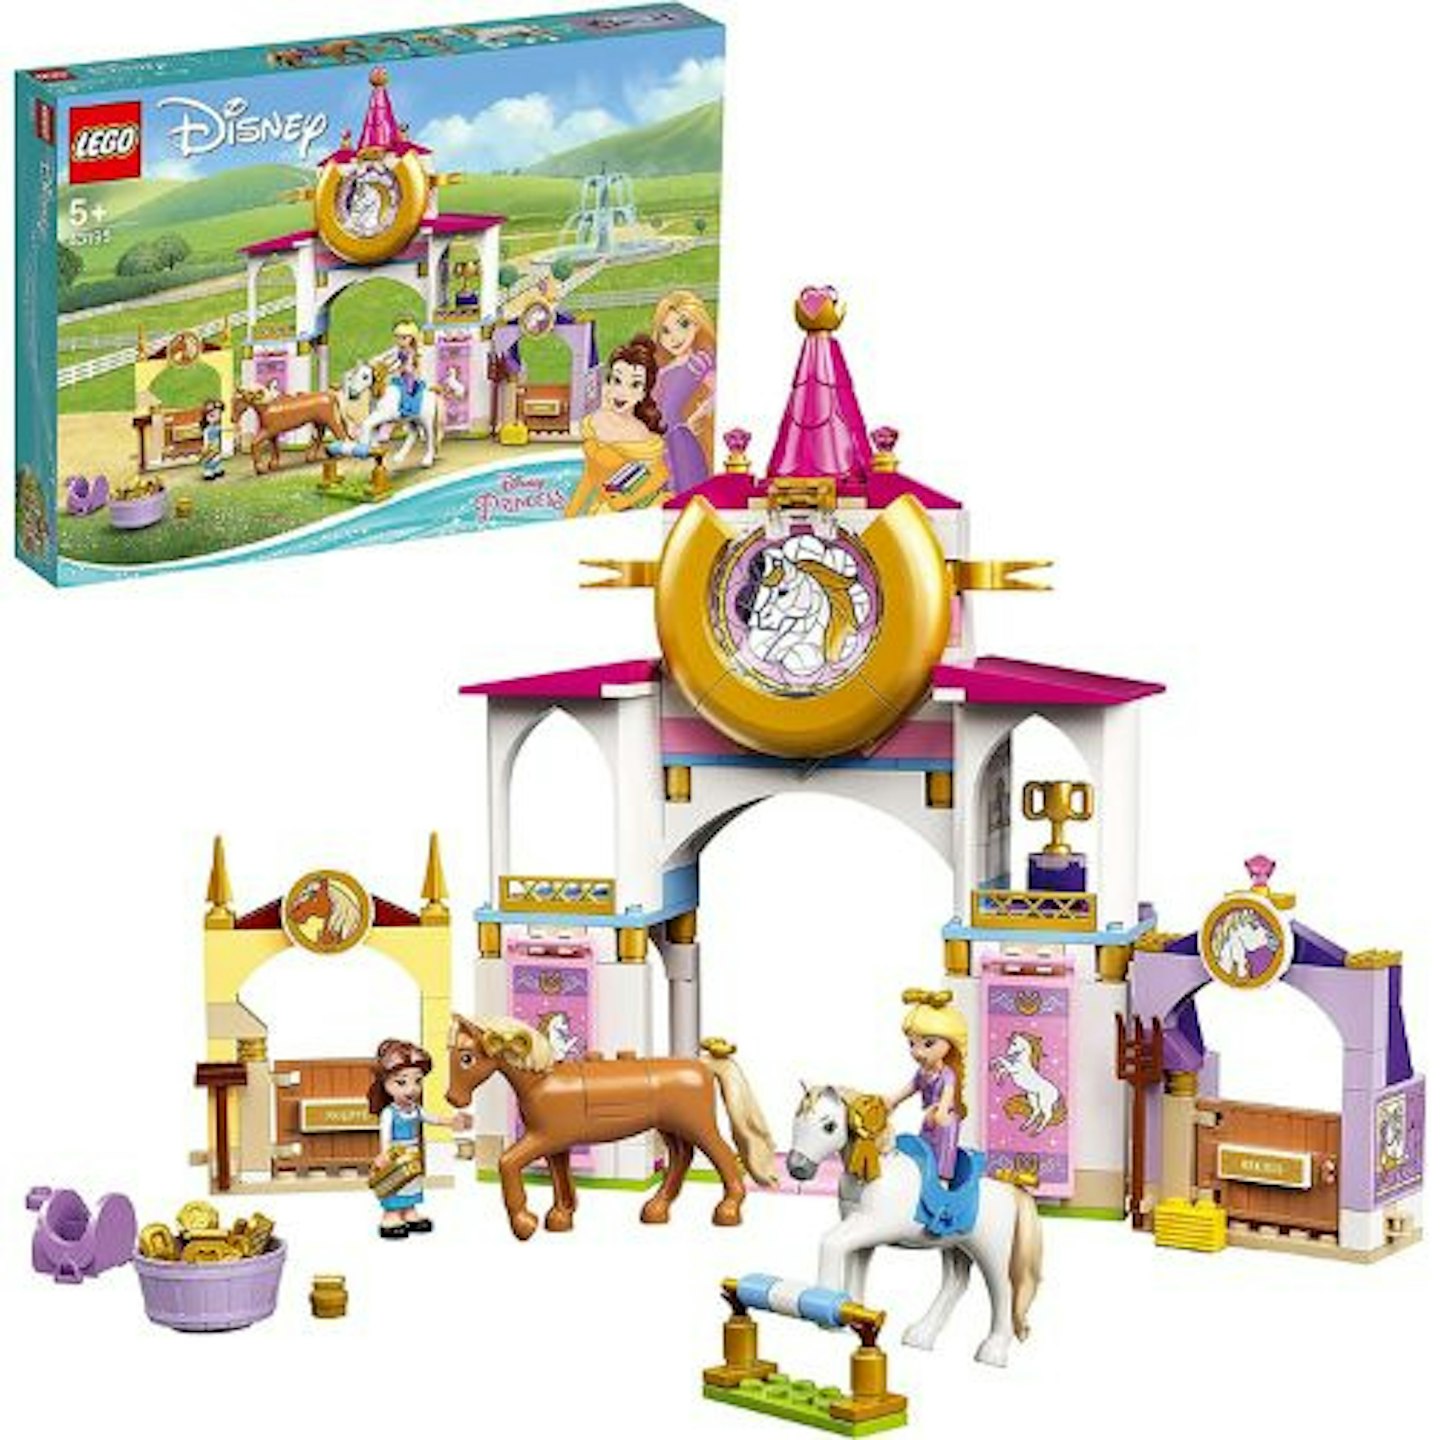 LEGO 43195 Disney Princess Belle and Rapunzel's Royal Stables Building Toy